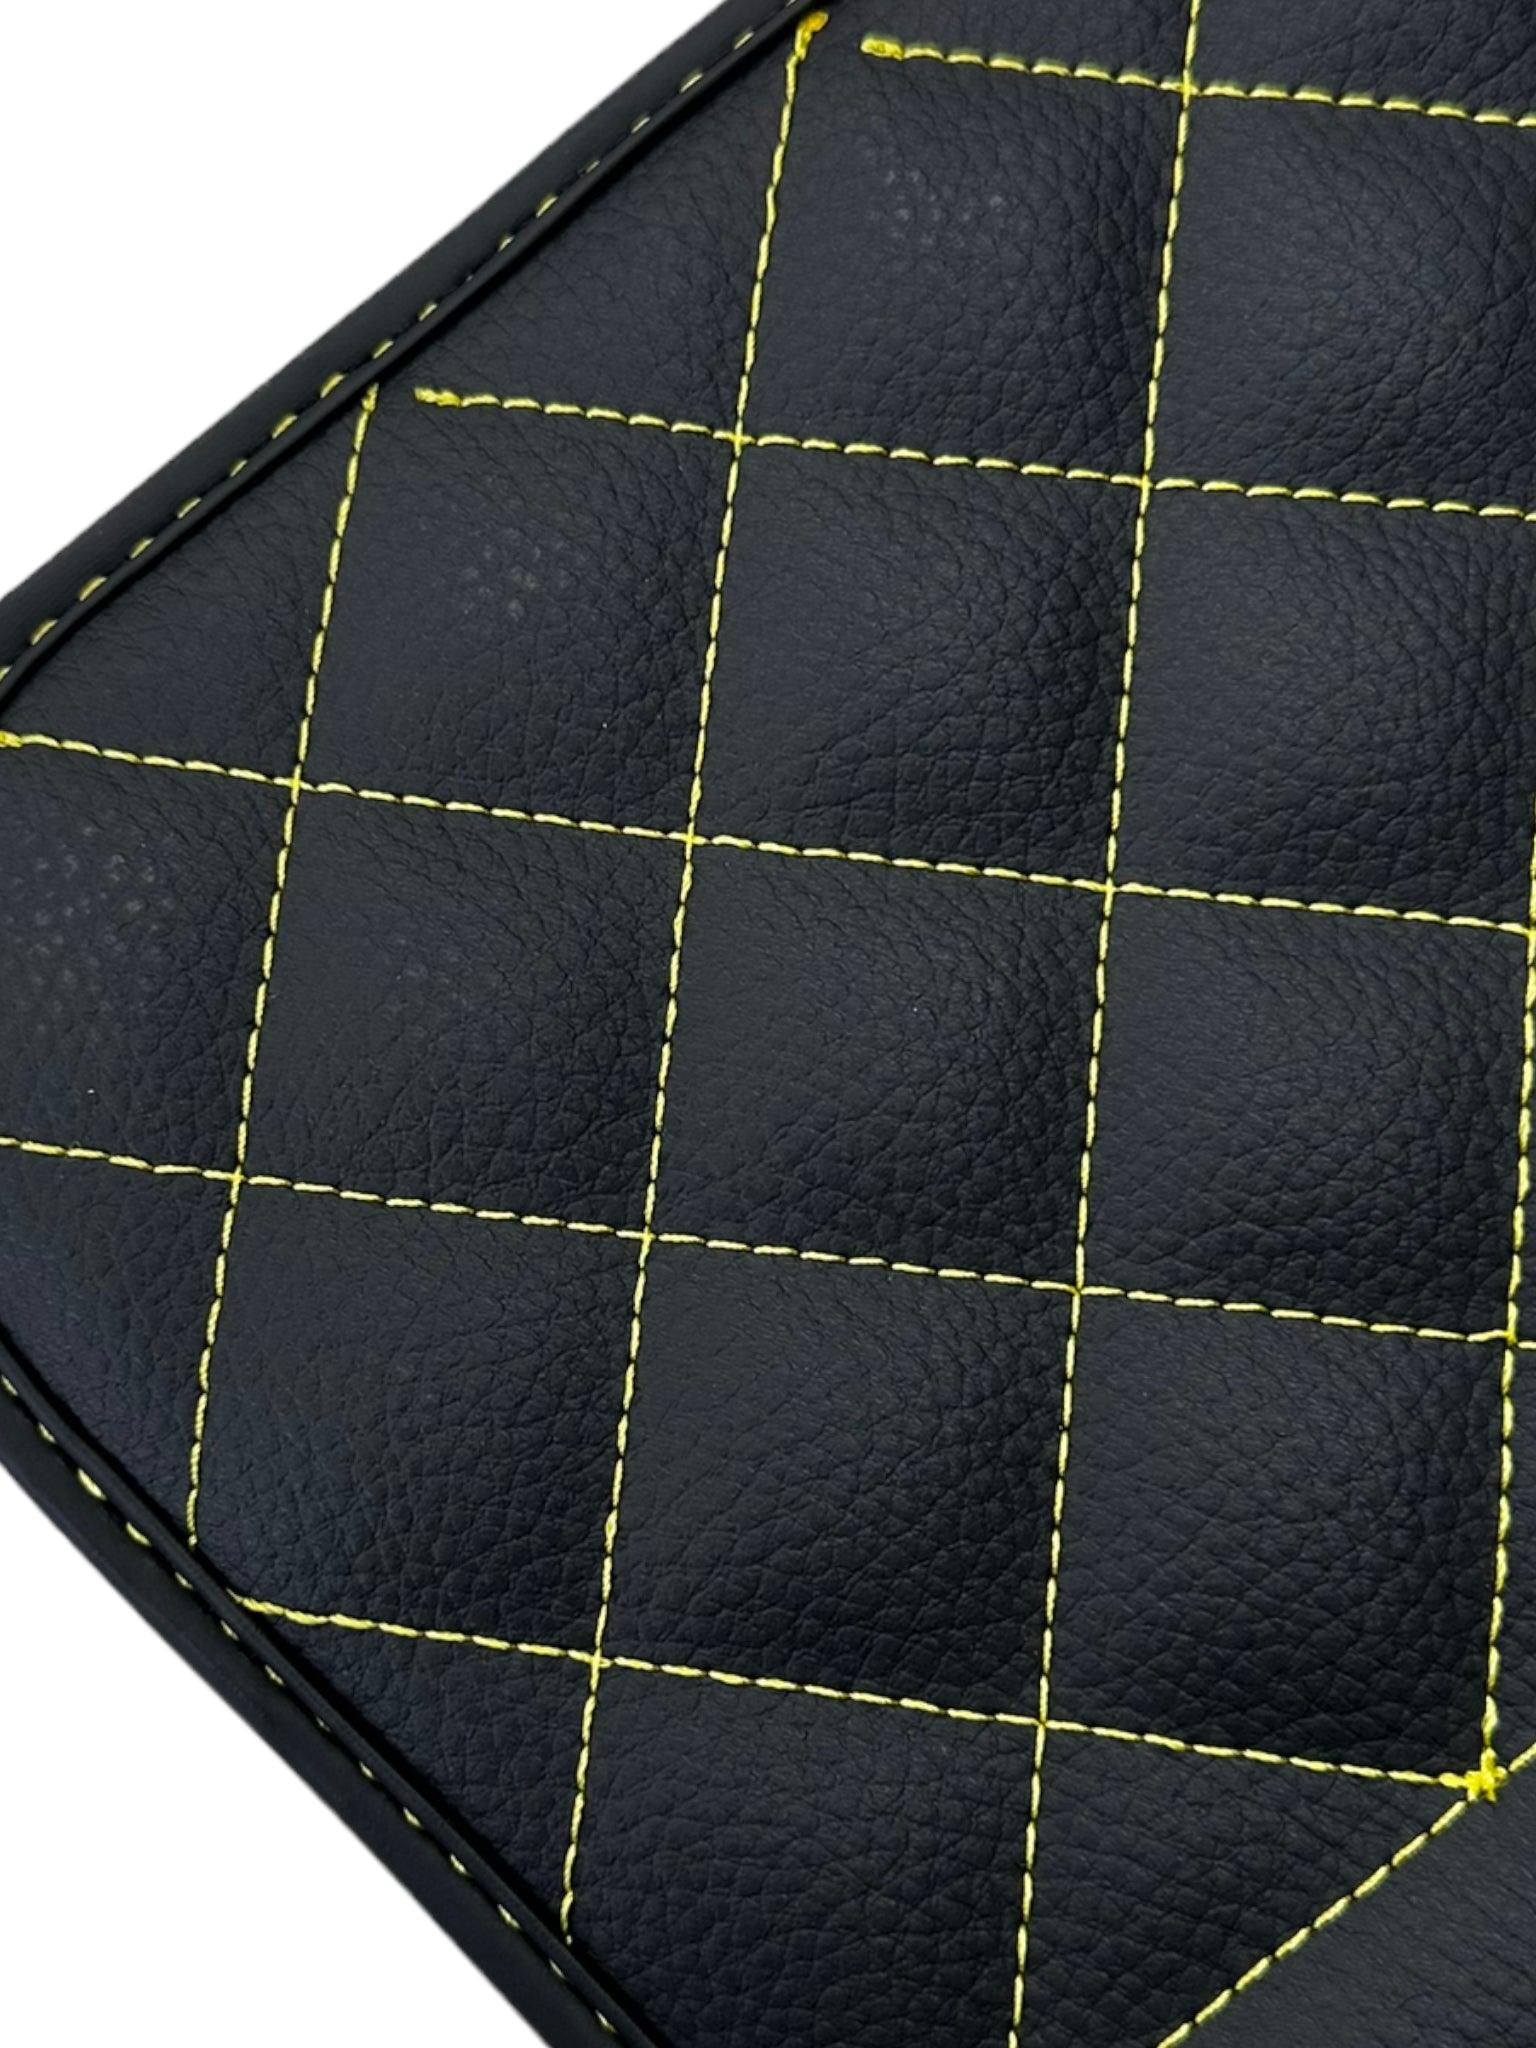 Leather Black Floor Mats for Lamborghini Gallardo Yellow Sewing | ER56 Design